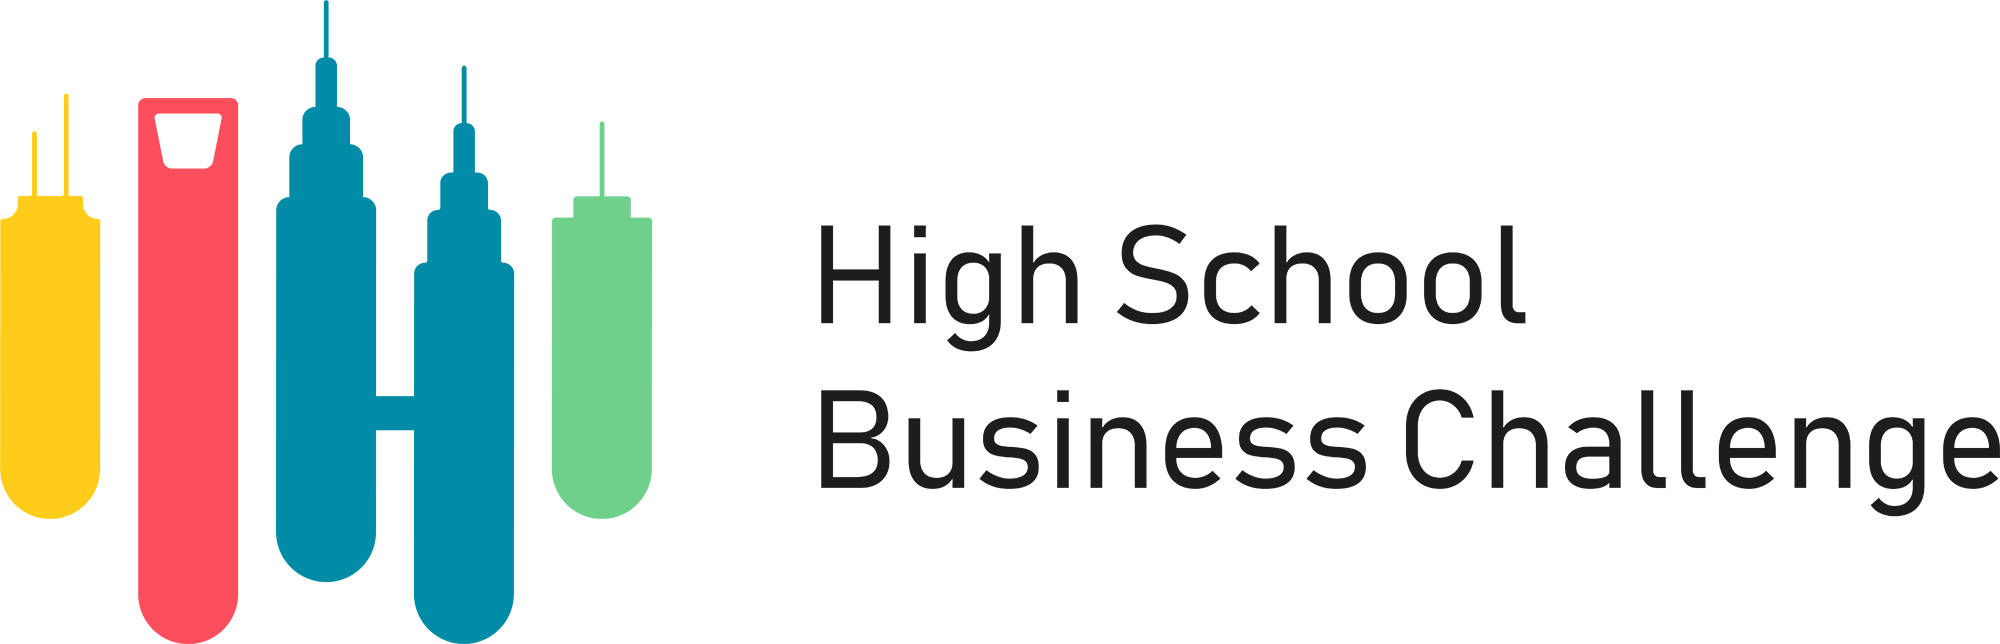 High School Business Challenge Logo